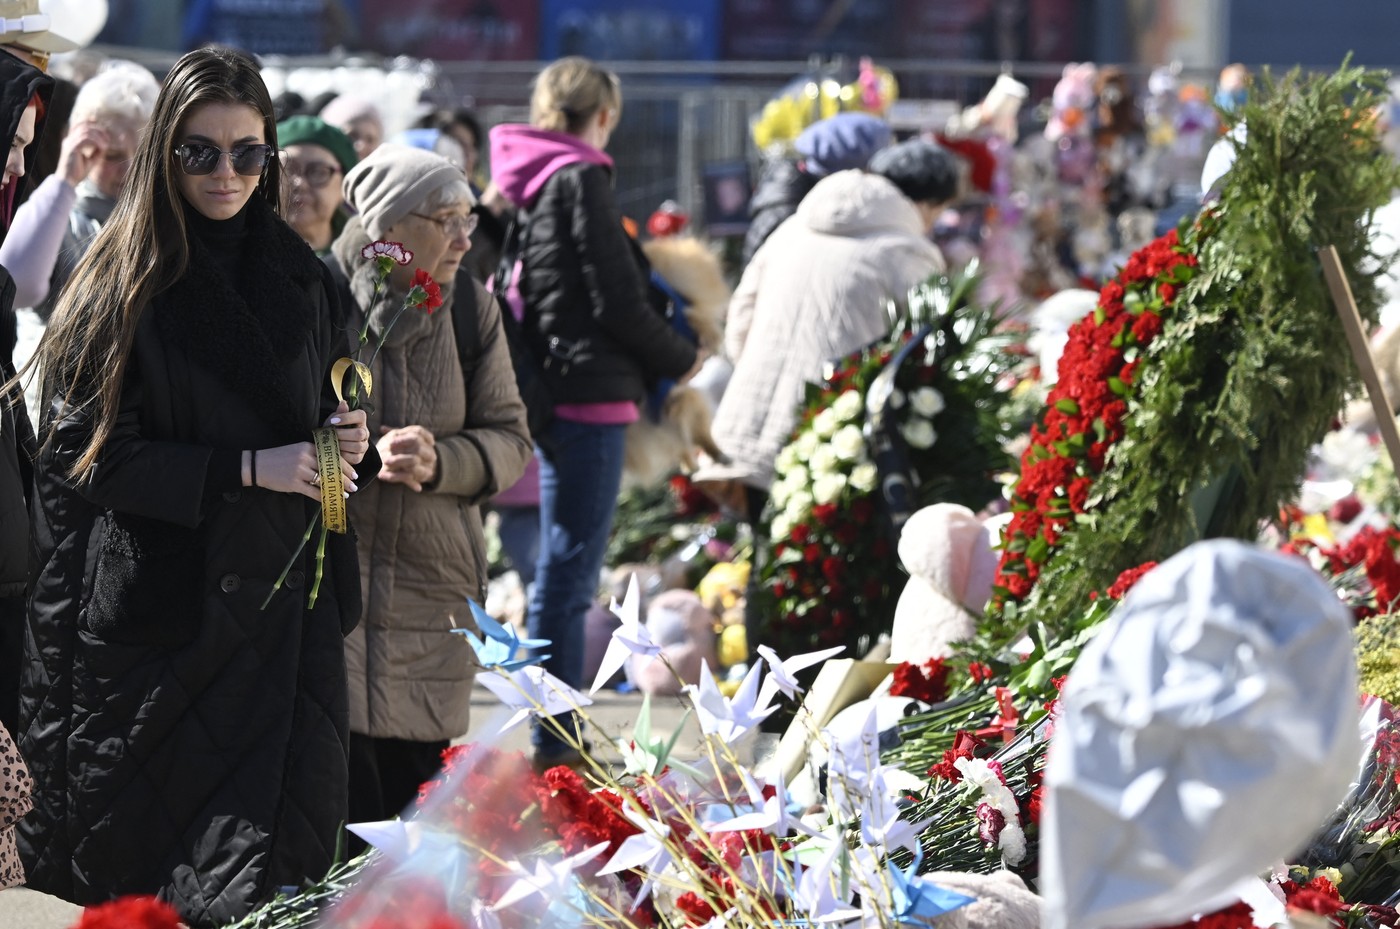 bilan-ul-atacului-terorist-de-la-moscova-a-urcat-la-143-de-mor-i-al-i-aproape-100-de-oameni-sunt-da-i-disp-ru-i